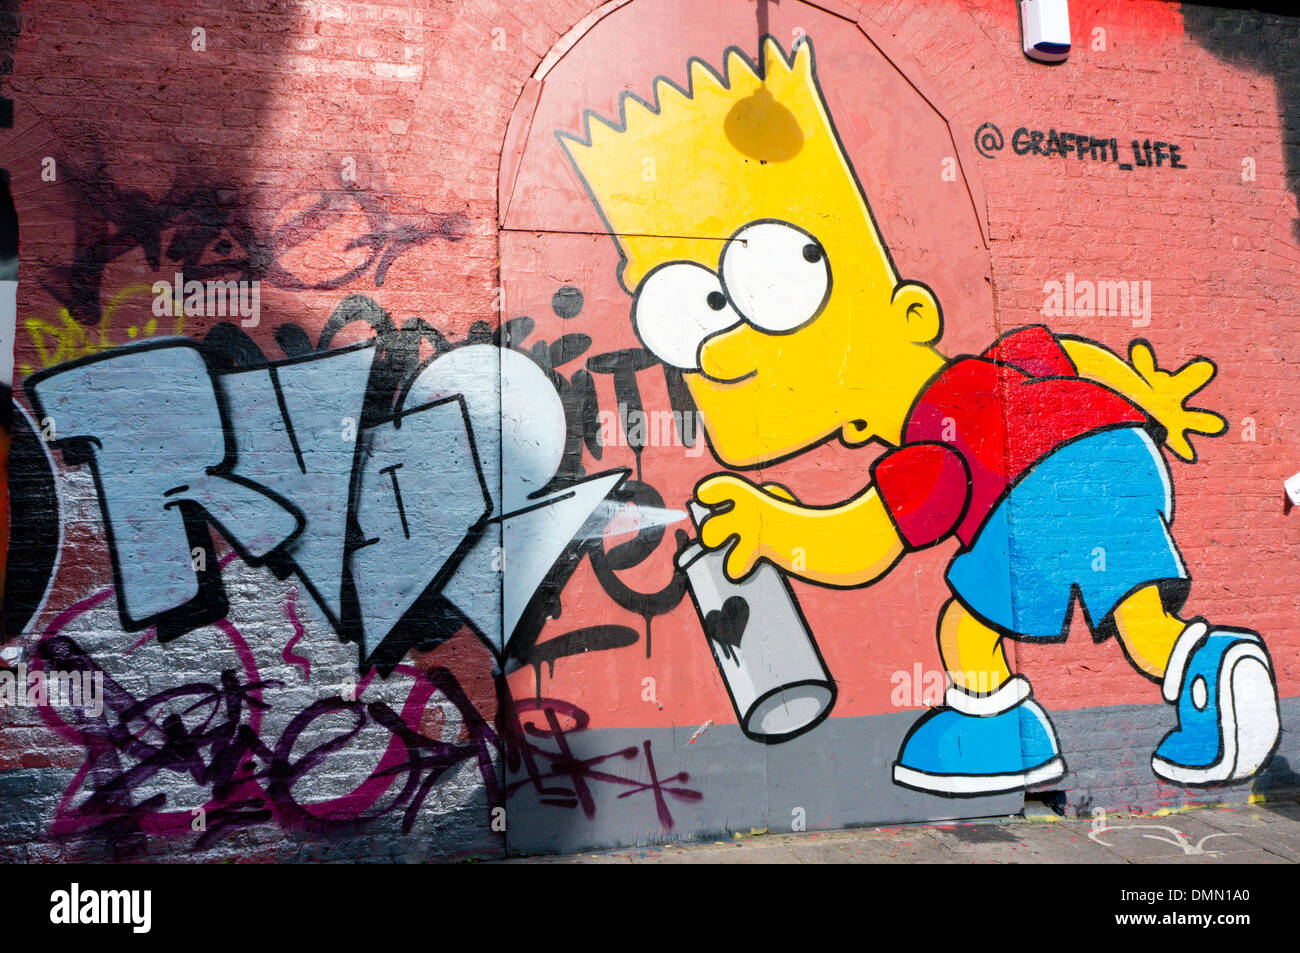 Ein Graffiti von Bart Simpson durch Graffiti Leben in Whitechapel, London. Stockfoto